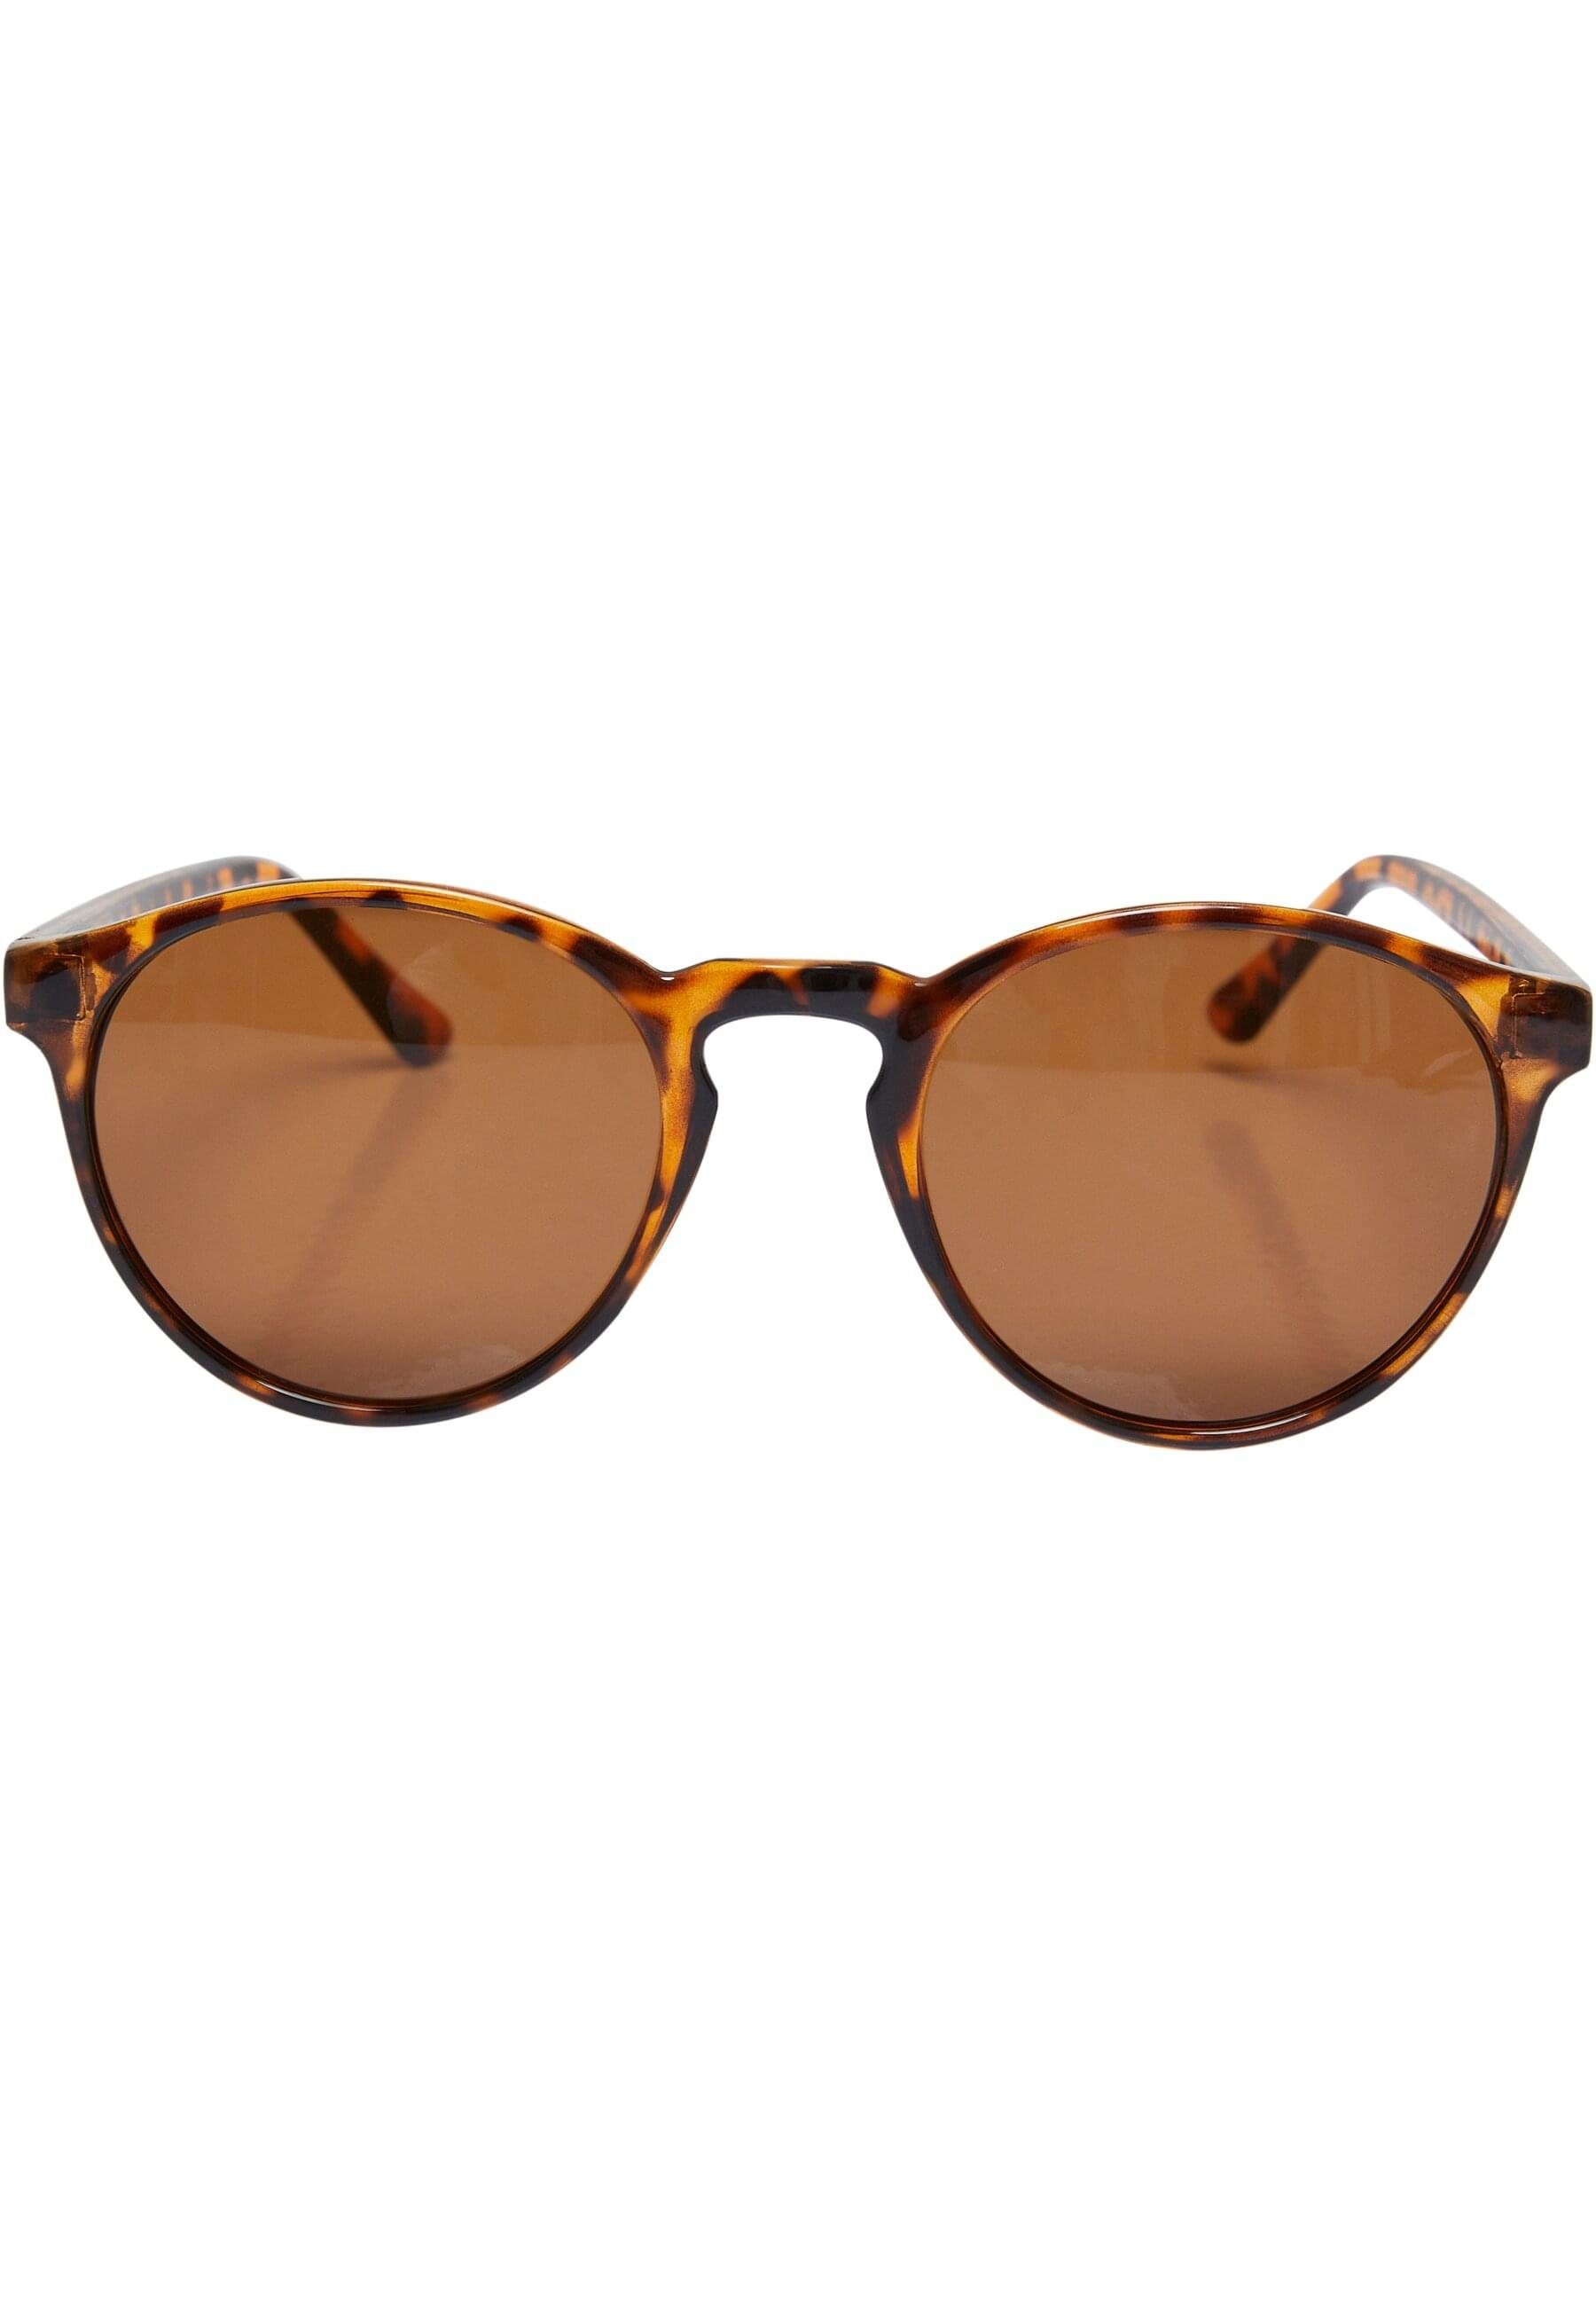 CLASSICS Unisex URBAN Sunglasses Sonnenbrille black/watergreen/amber 3-Pack Cypress